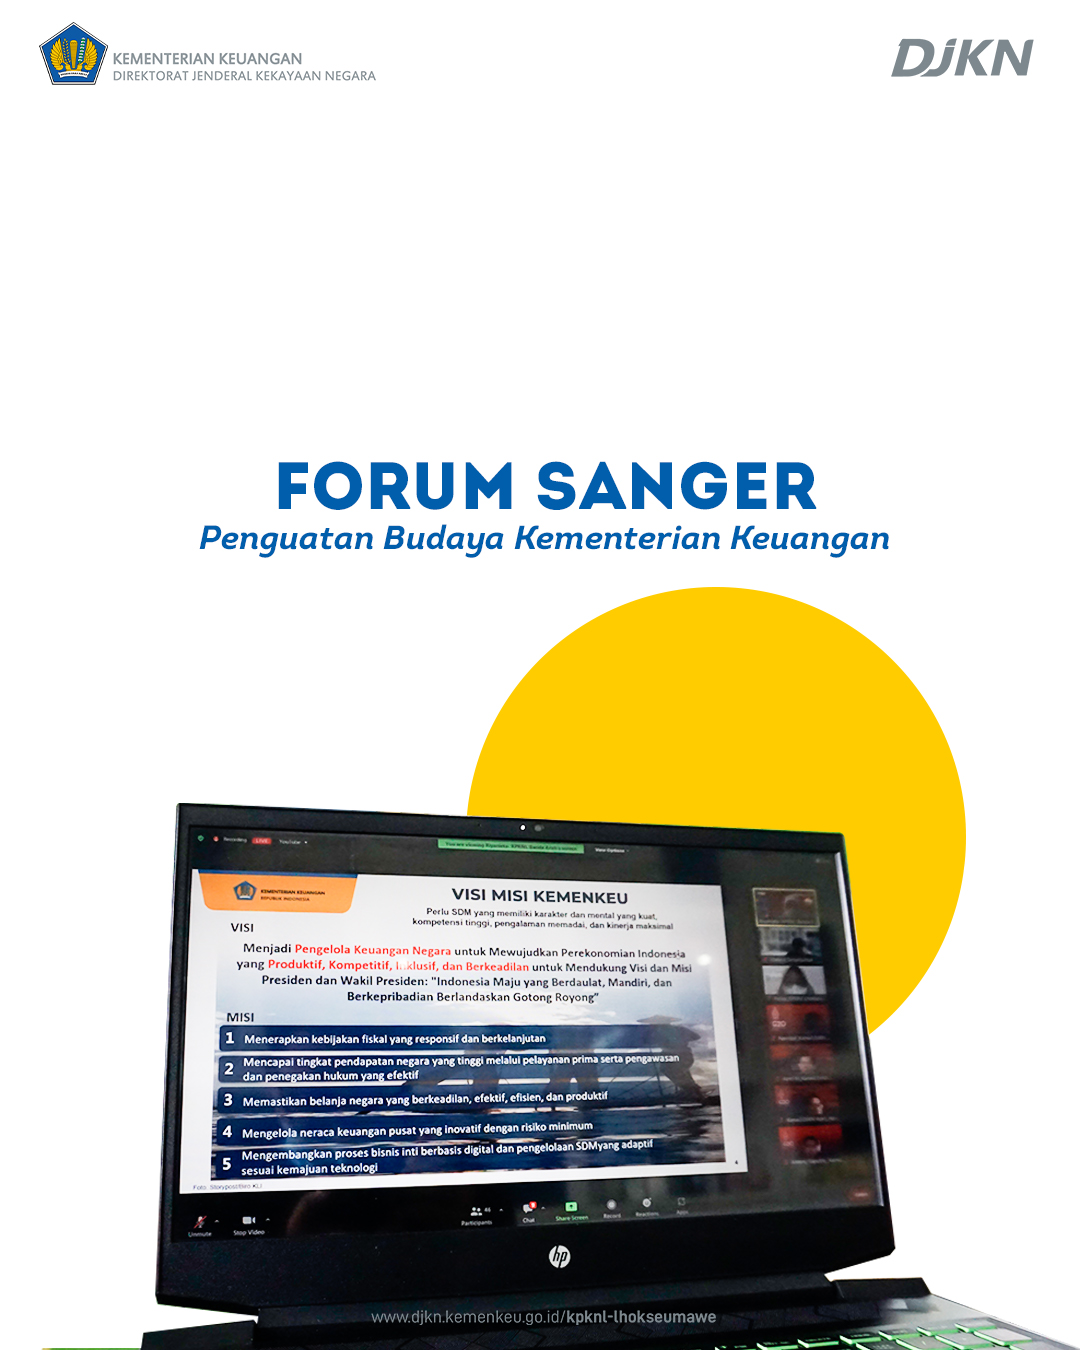 Penguatan Budaya Kementerian Keuangan dalam Forum Sanger Kanwil DJKN Aceh